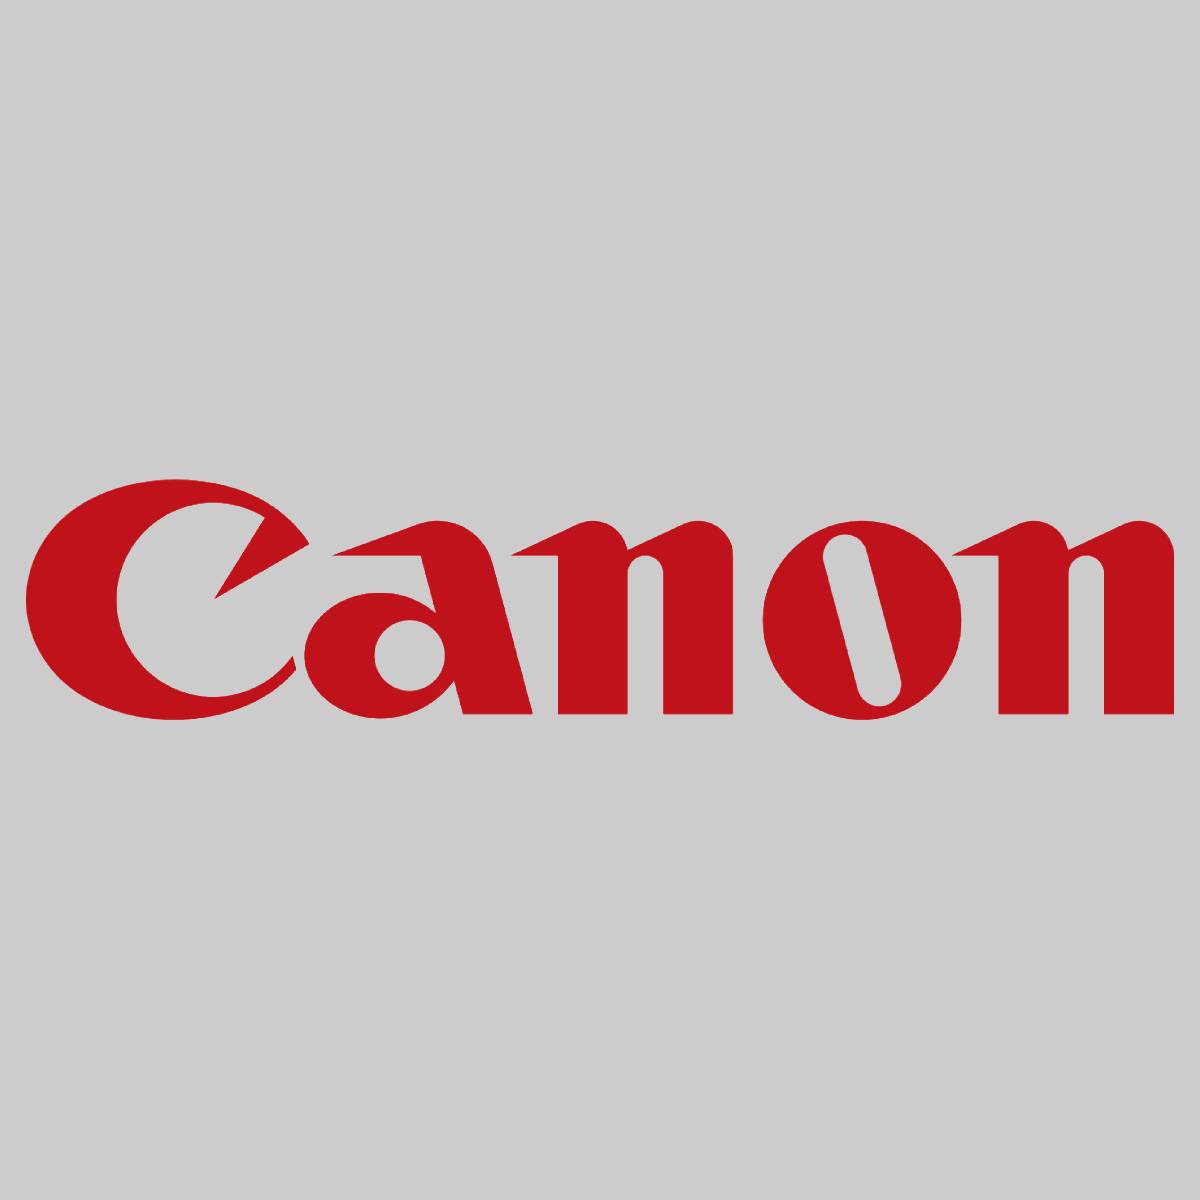 "Original Canon 040H toner cartridge Black 0461C002 for I-SENSYS-LBP 710-720^